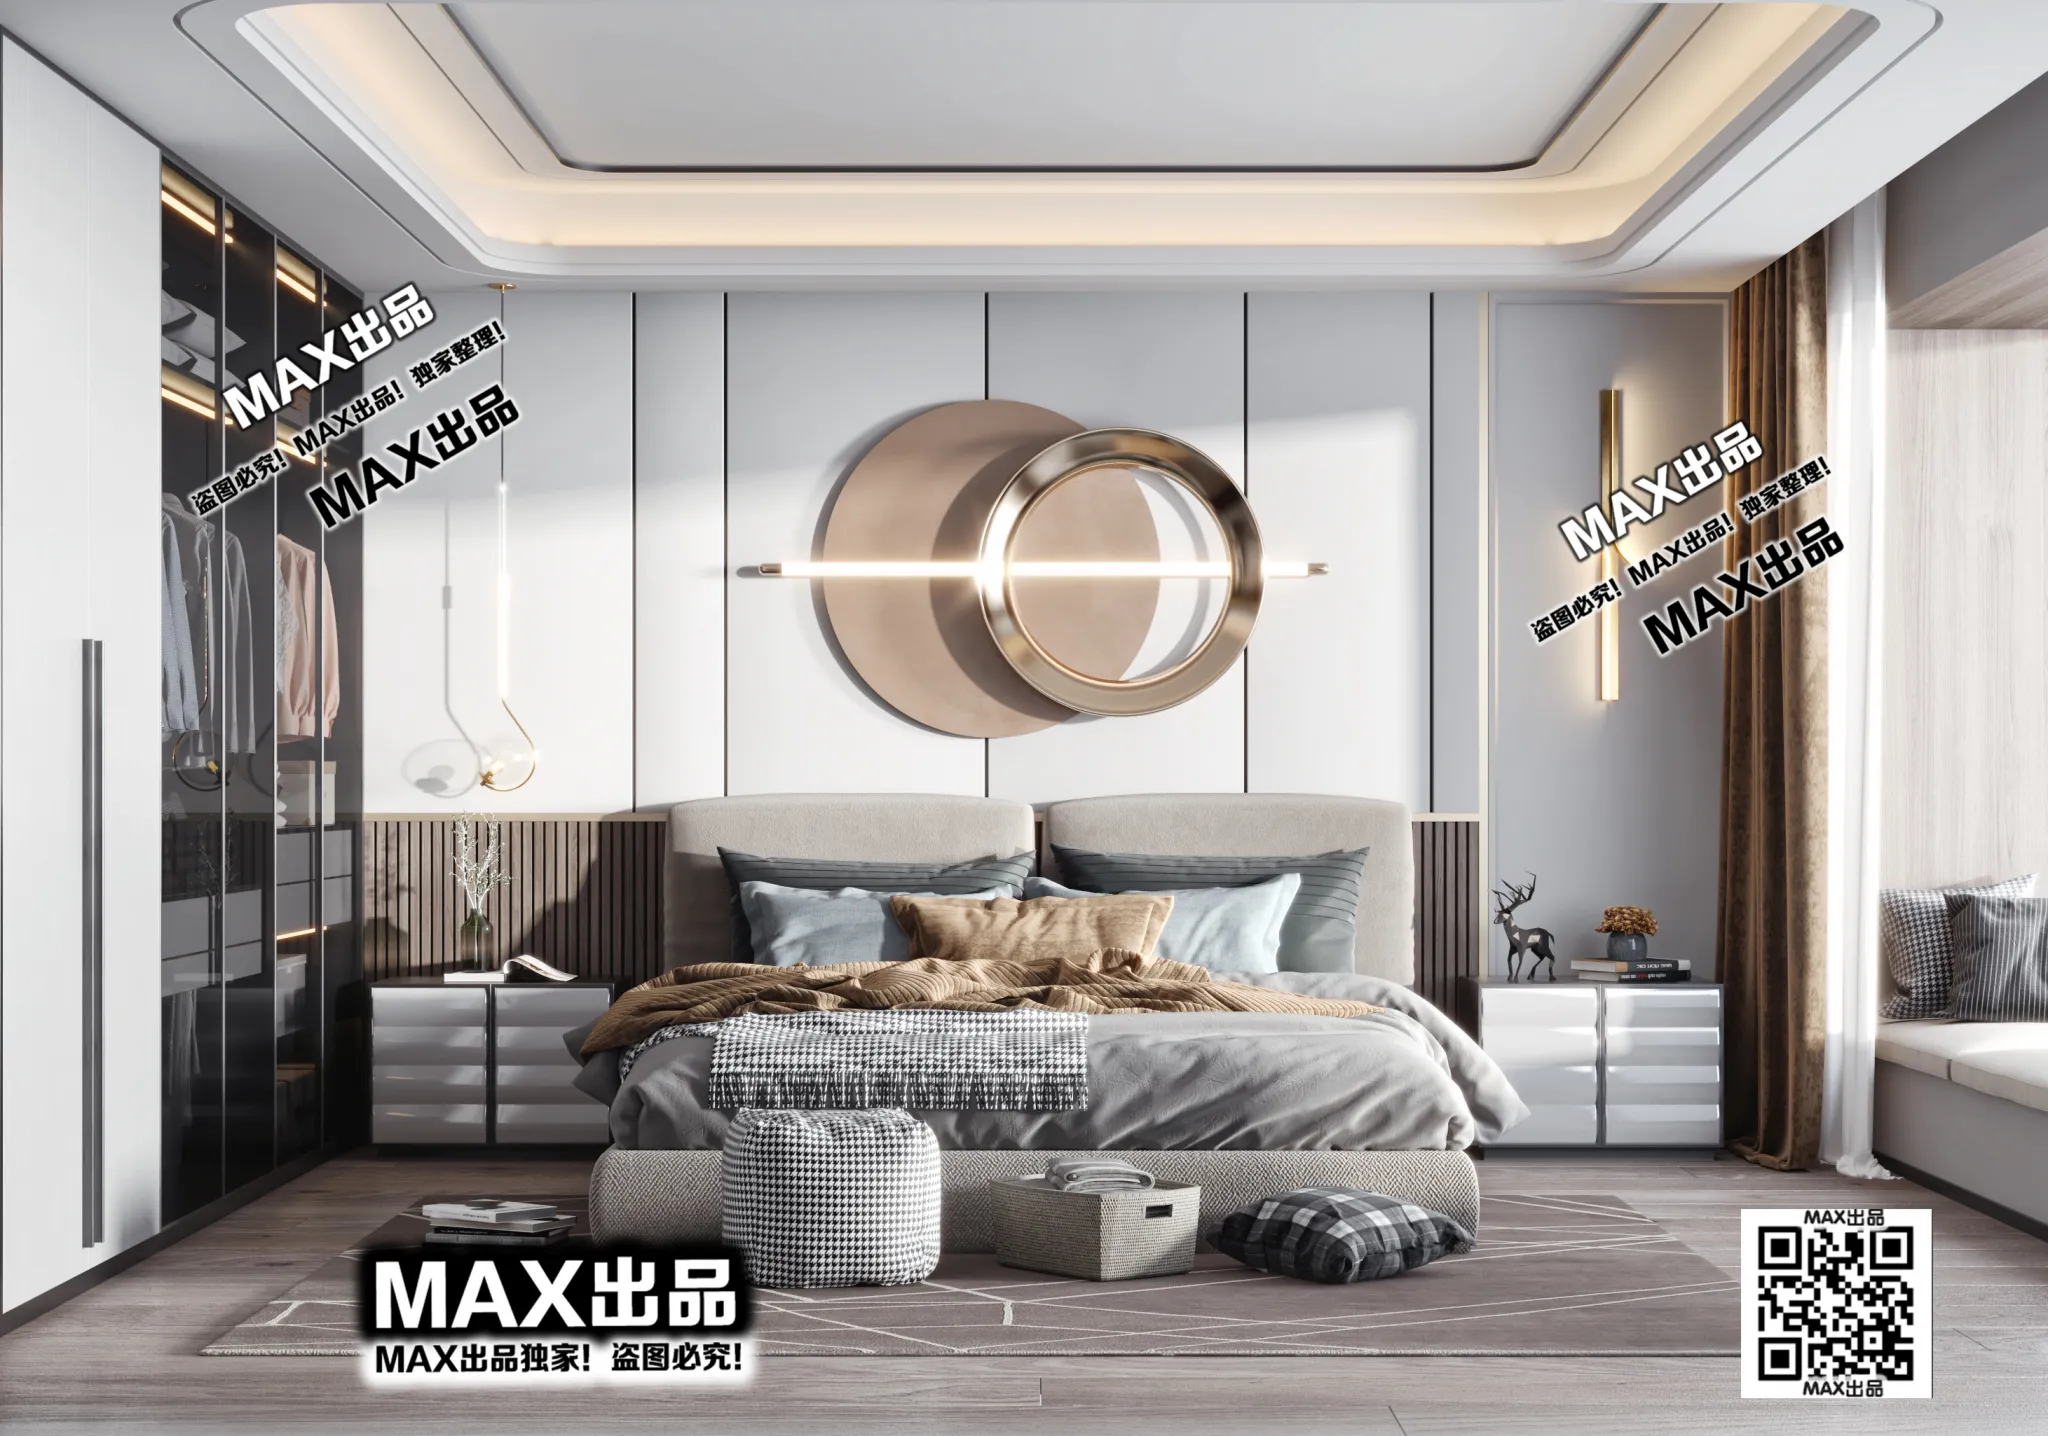 3DS MAX SCENES – LIVING ROOM – 009